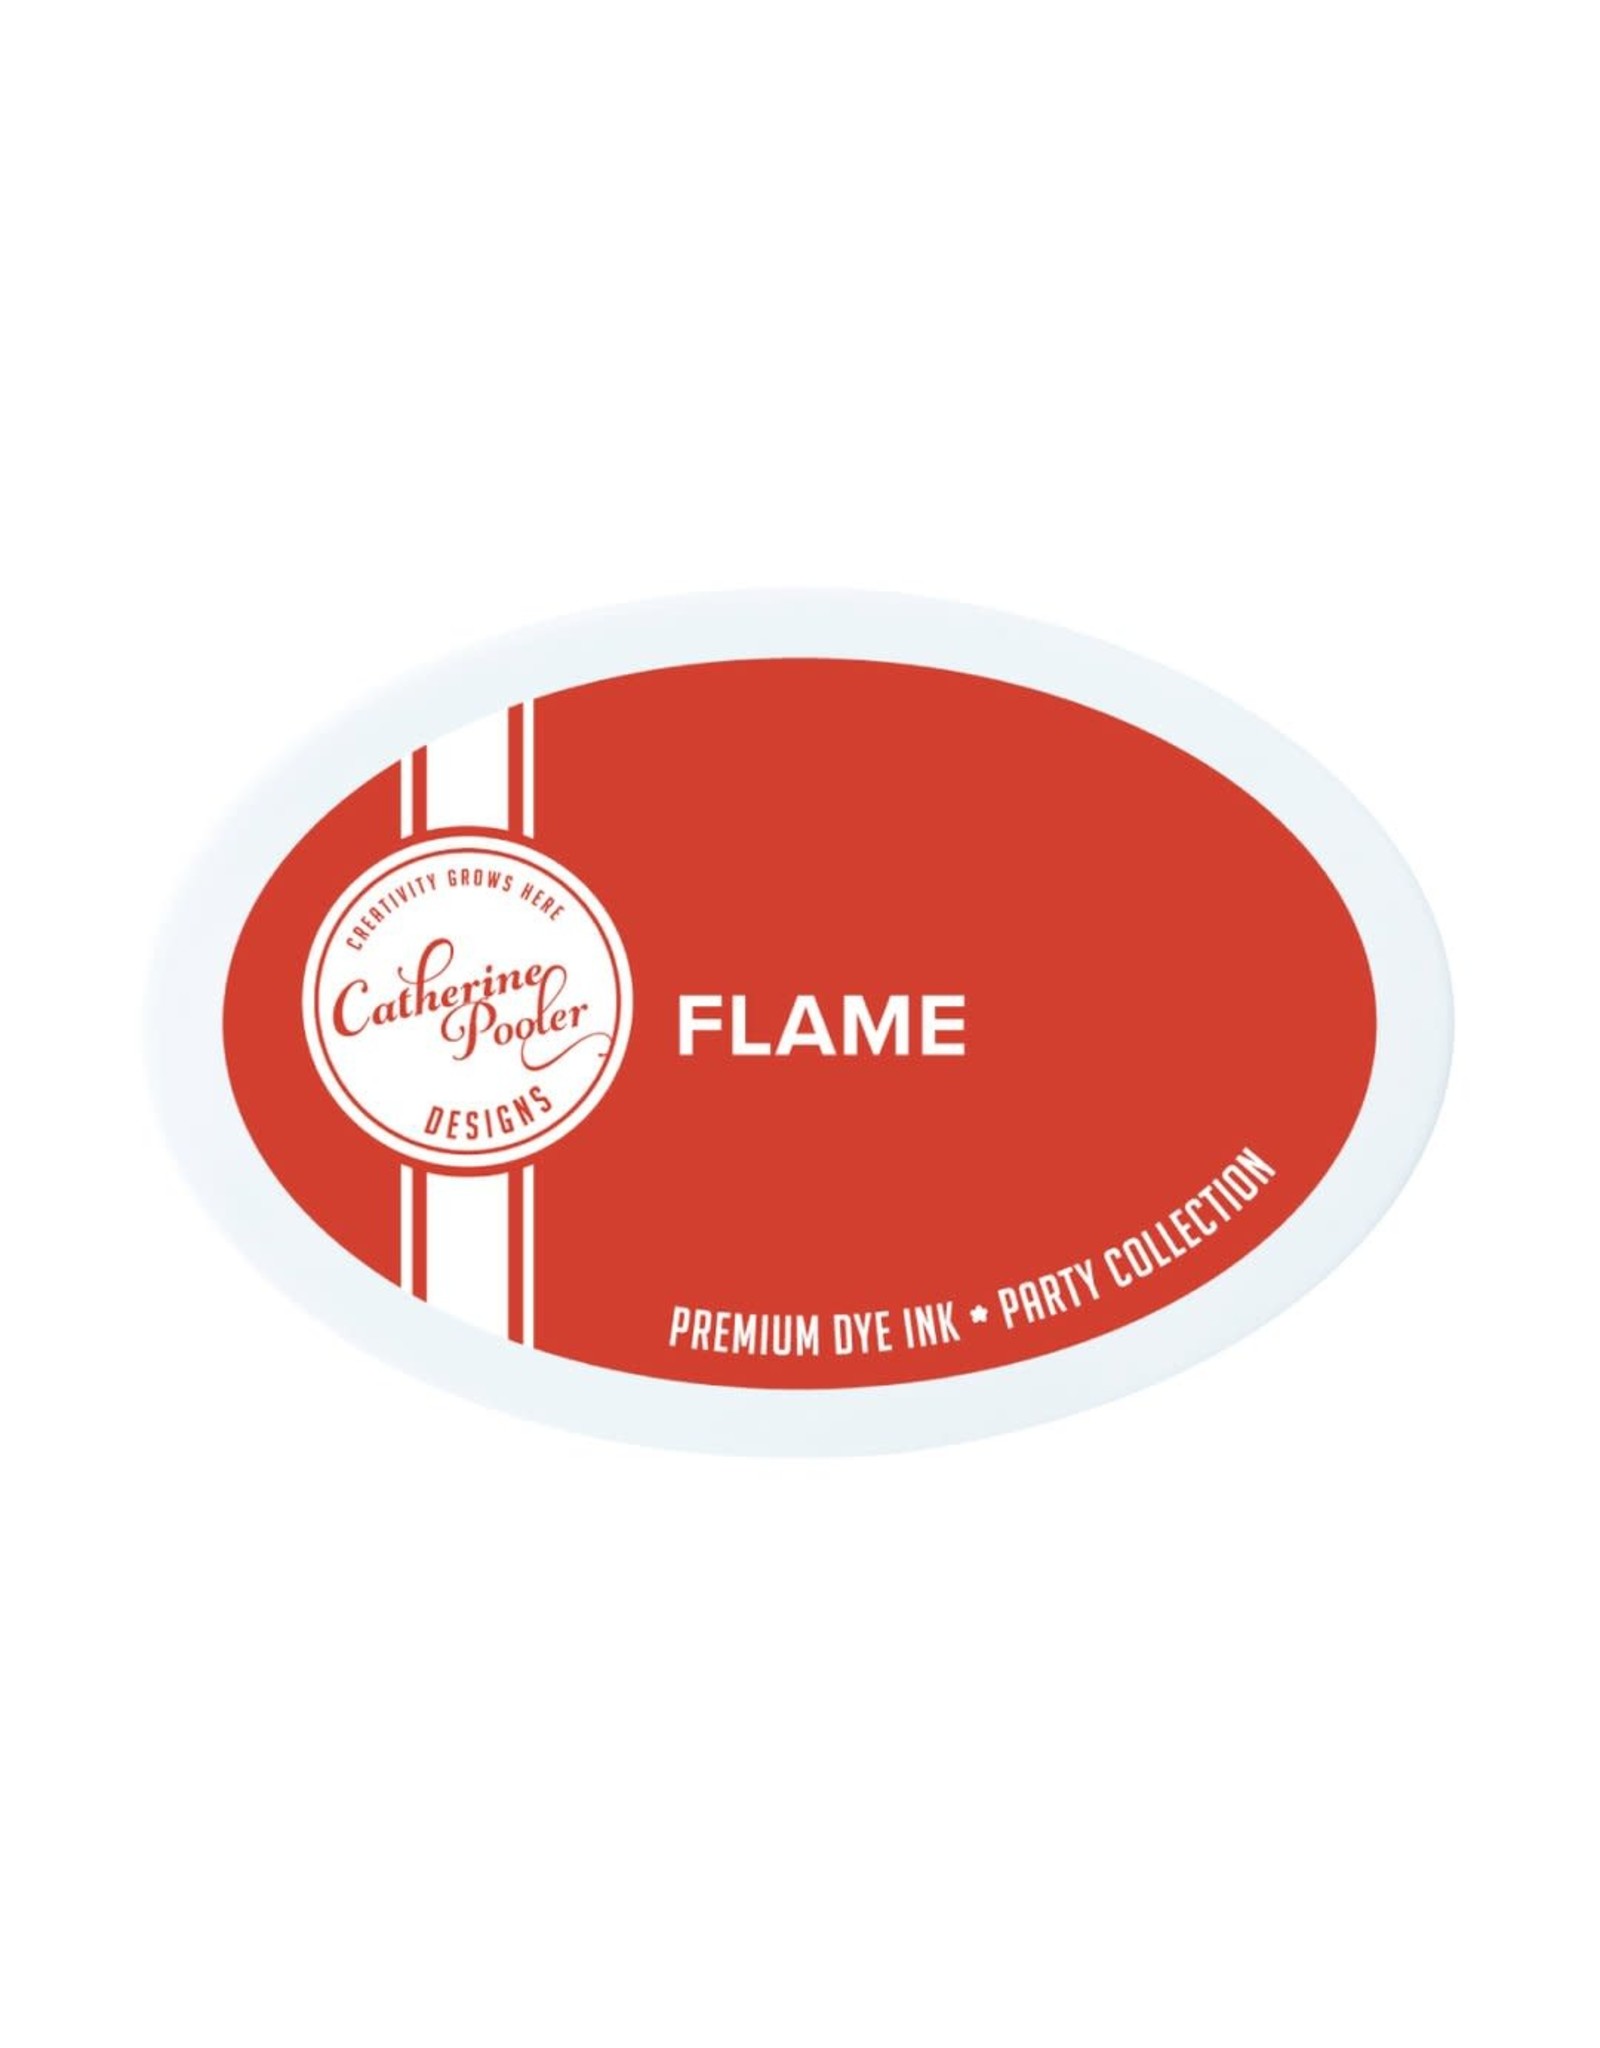 Catherine Pooler Designs Flame Ink Pad